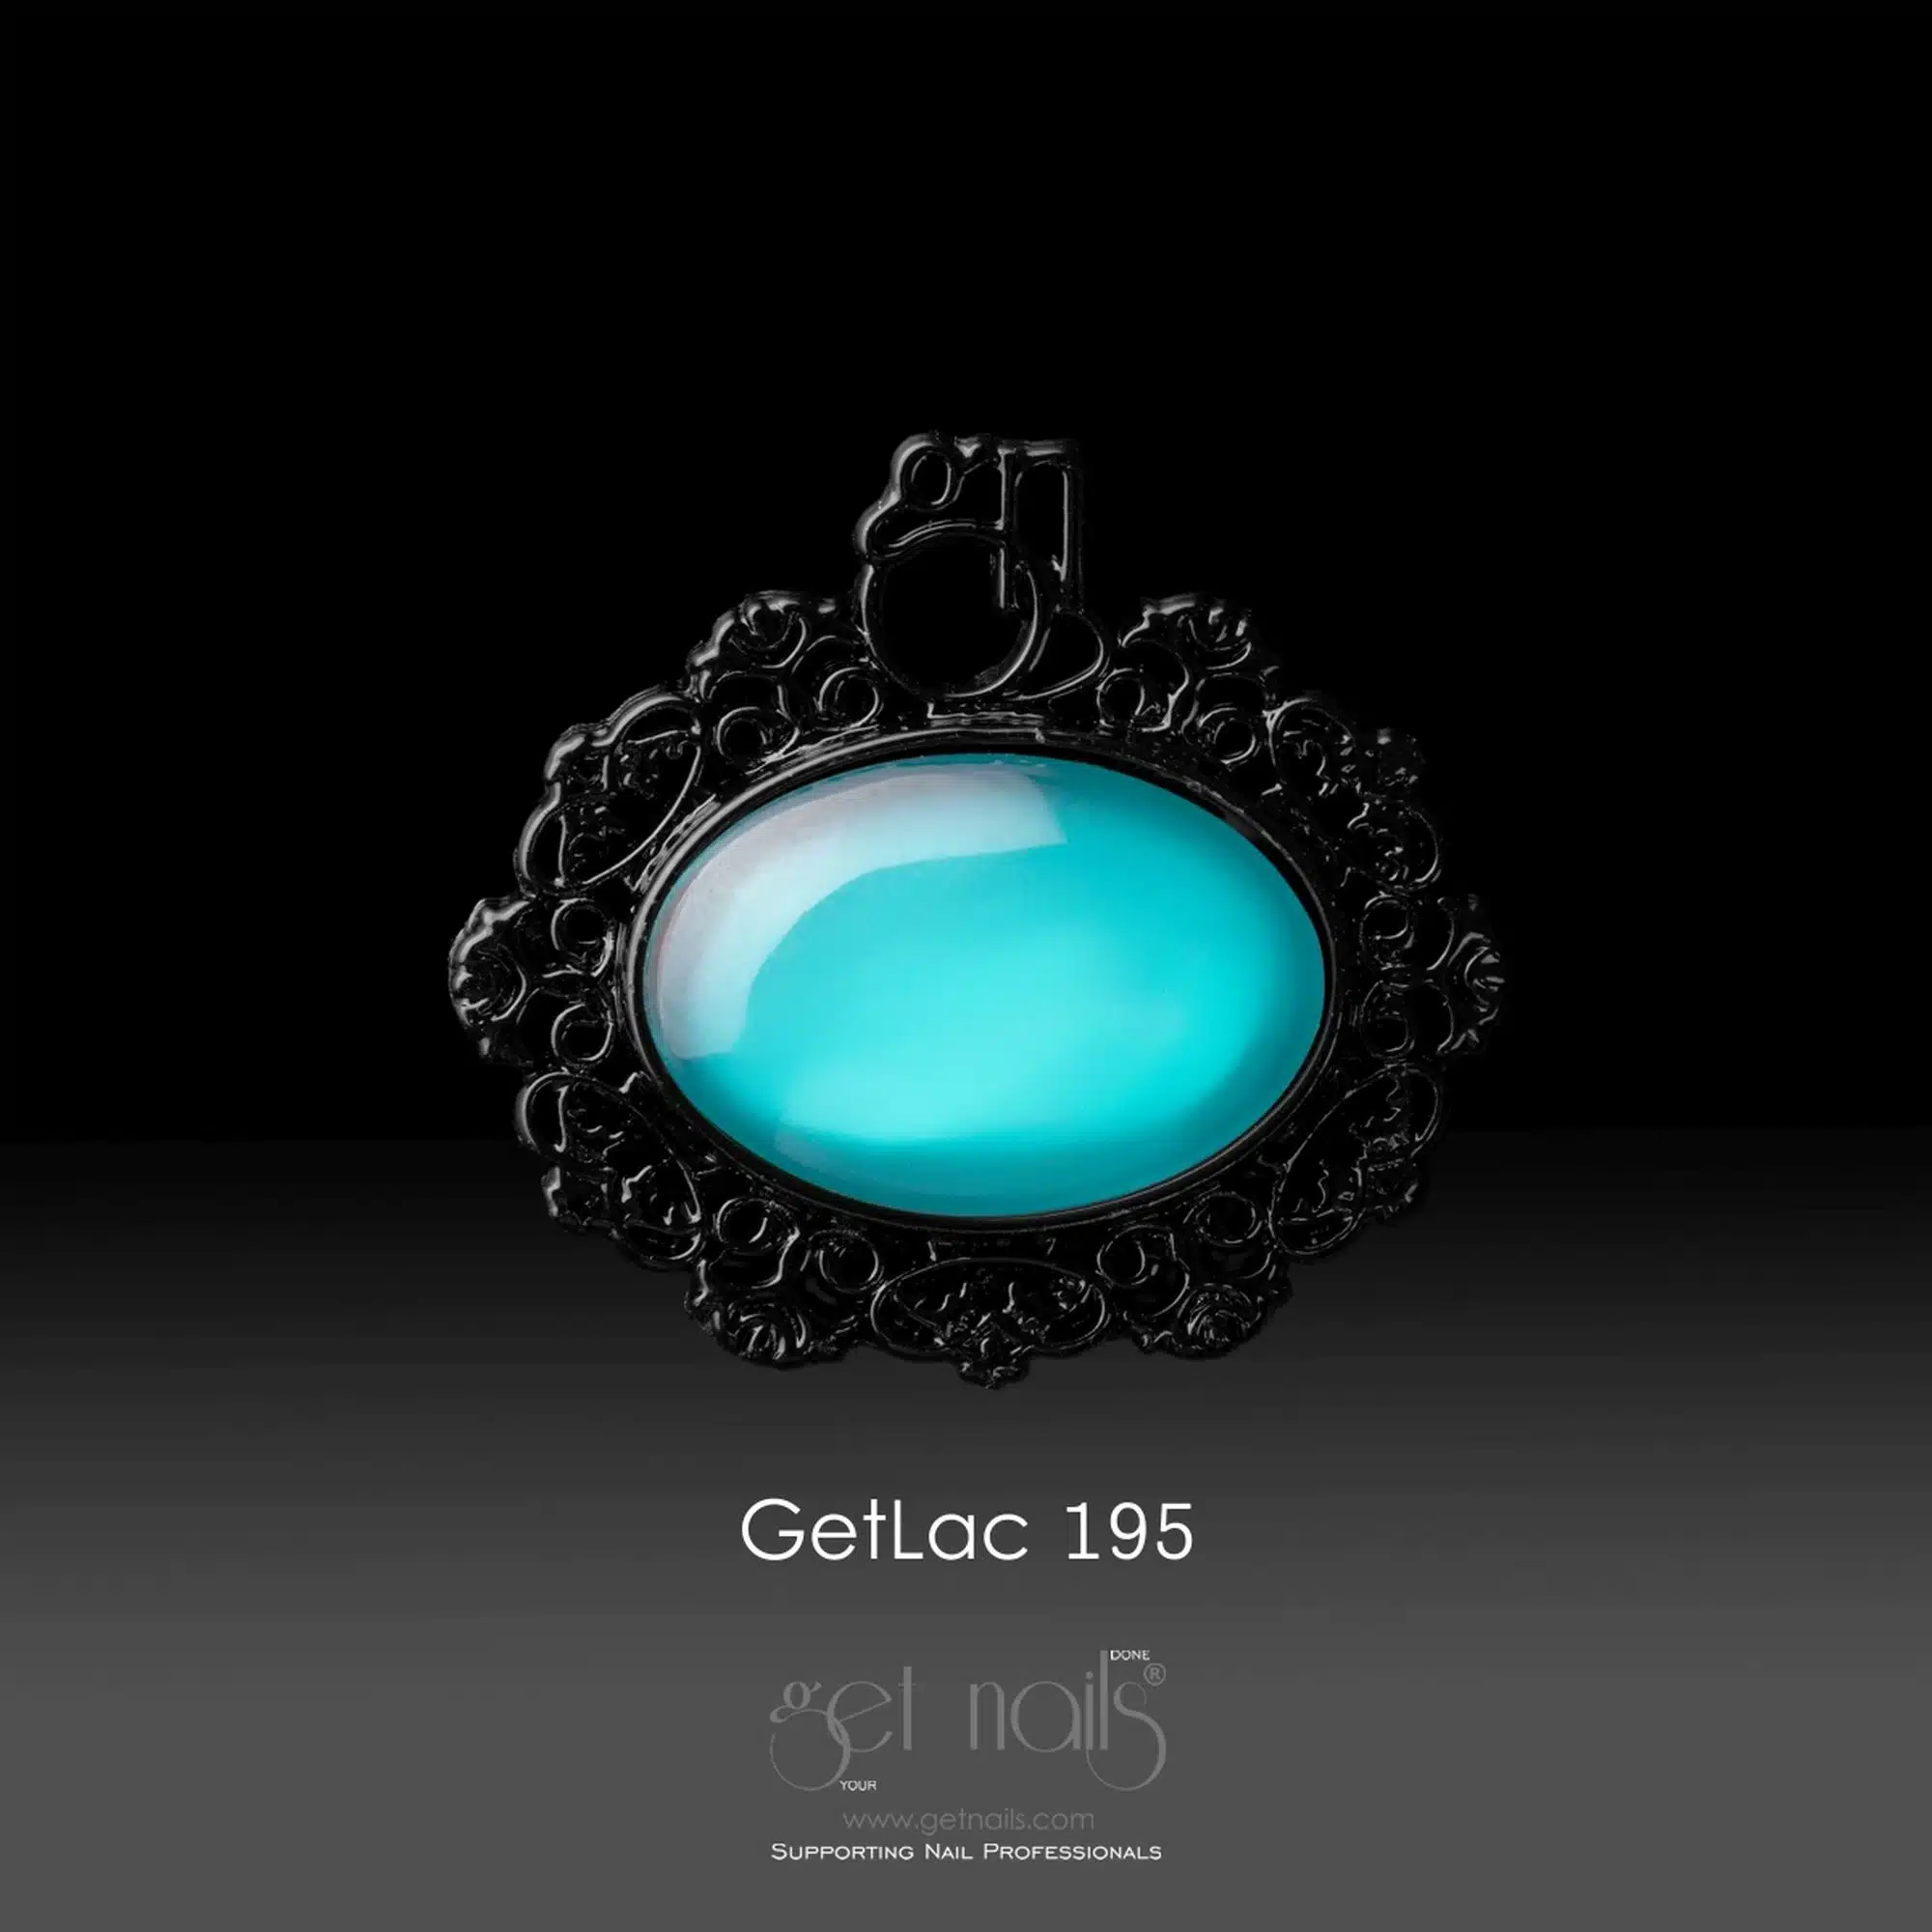 Get Nails Austria - GetLac 195 Blue Curacao 15г